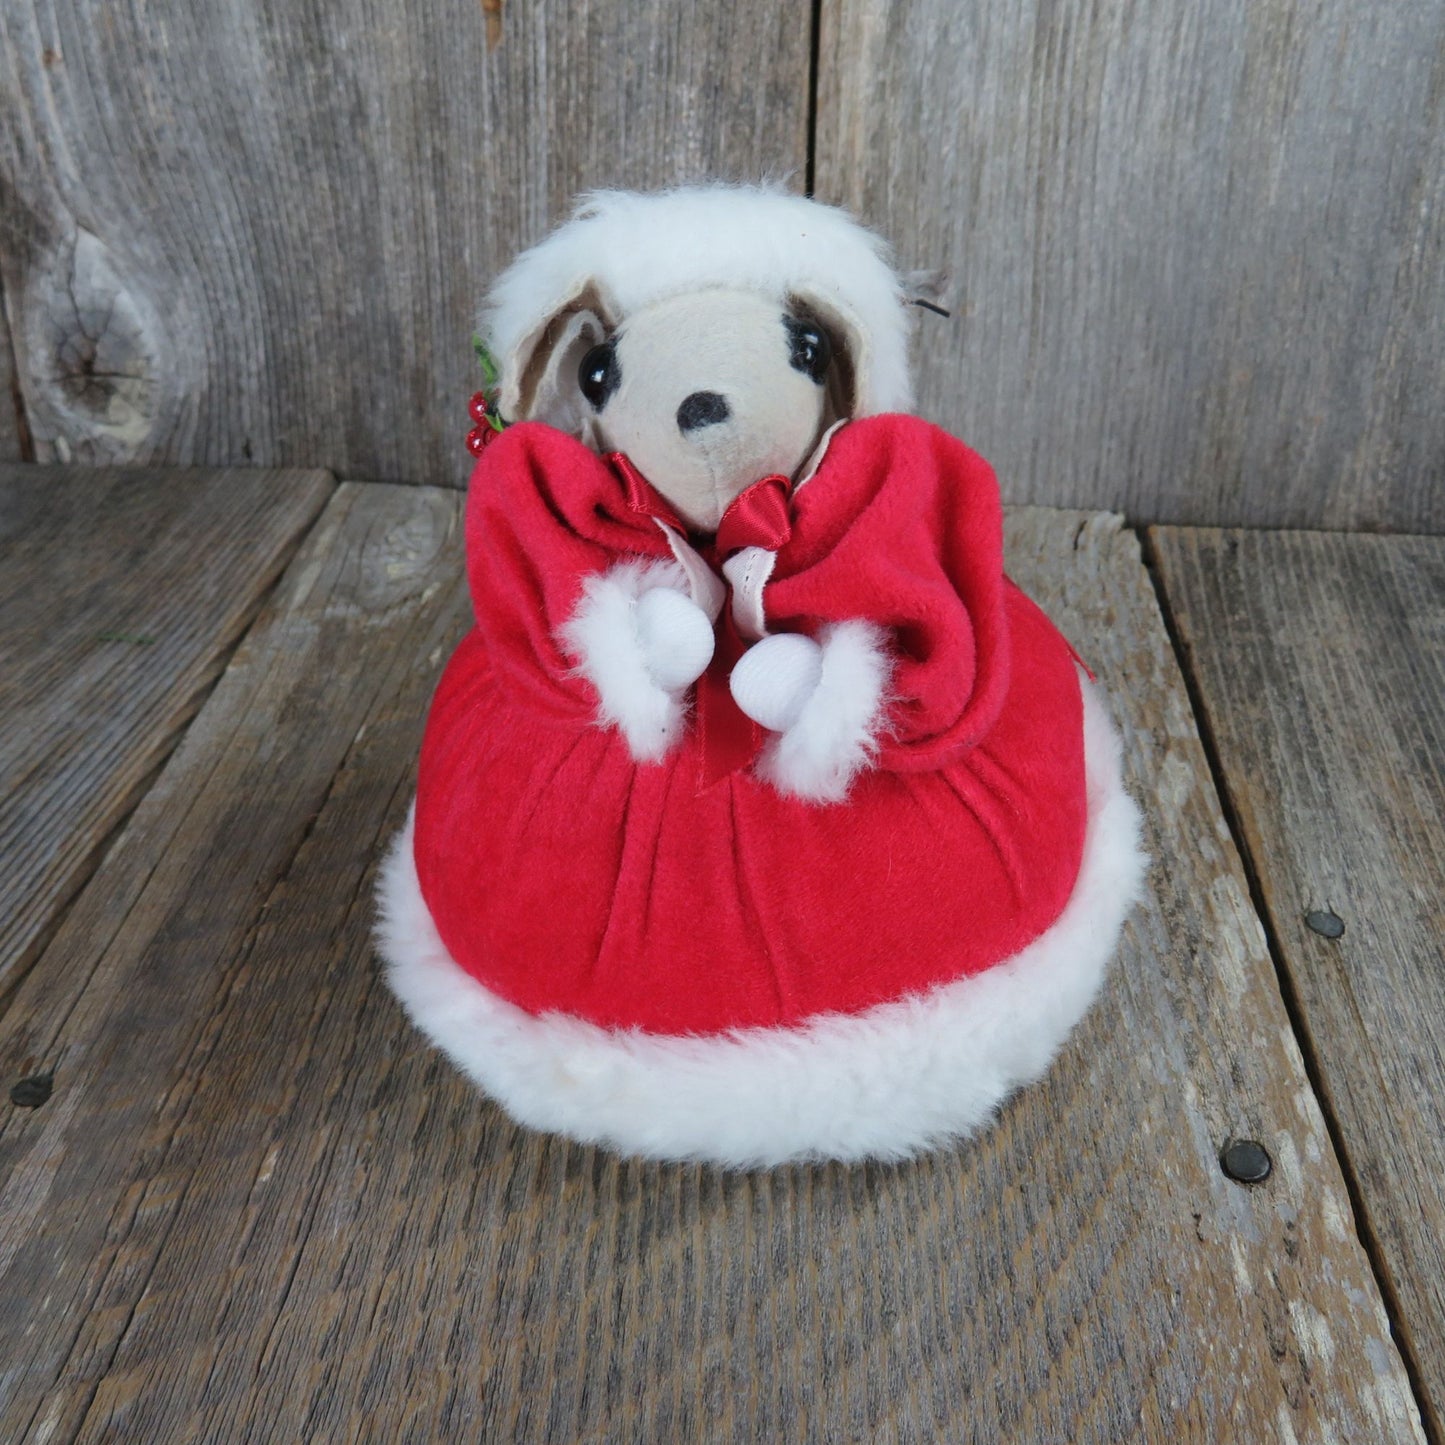 Vintage Christmas Mouse Plush Decoration Mrs Claus Red Dress Felt Body Stuffed Animal